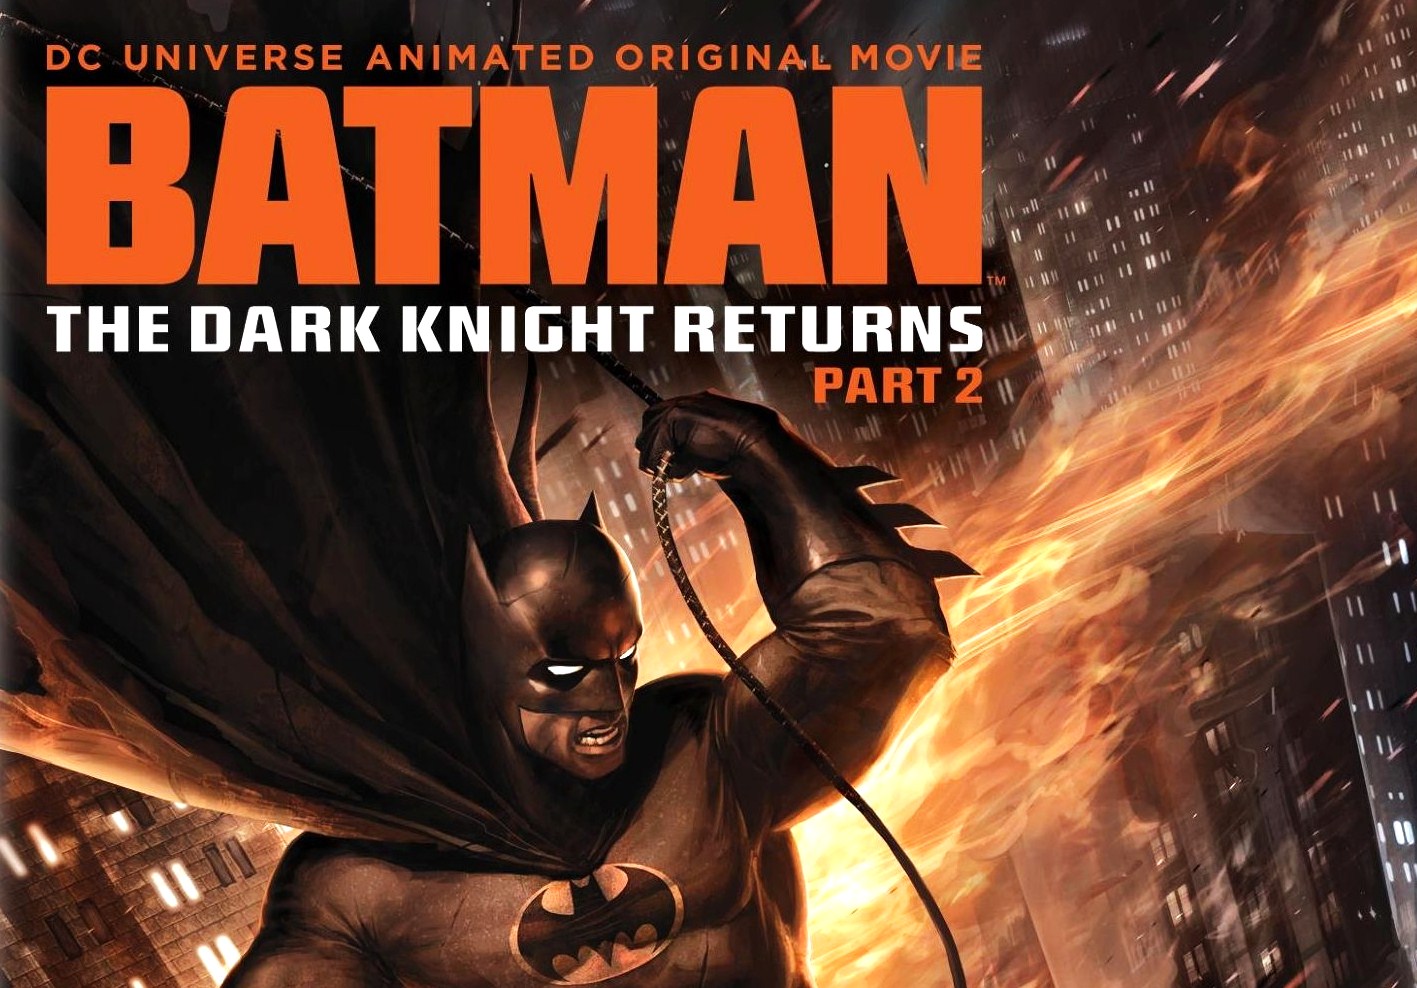 Batman The Dark Knight Returns Part 2 2013 Full Movie Online In Hd Quality